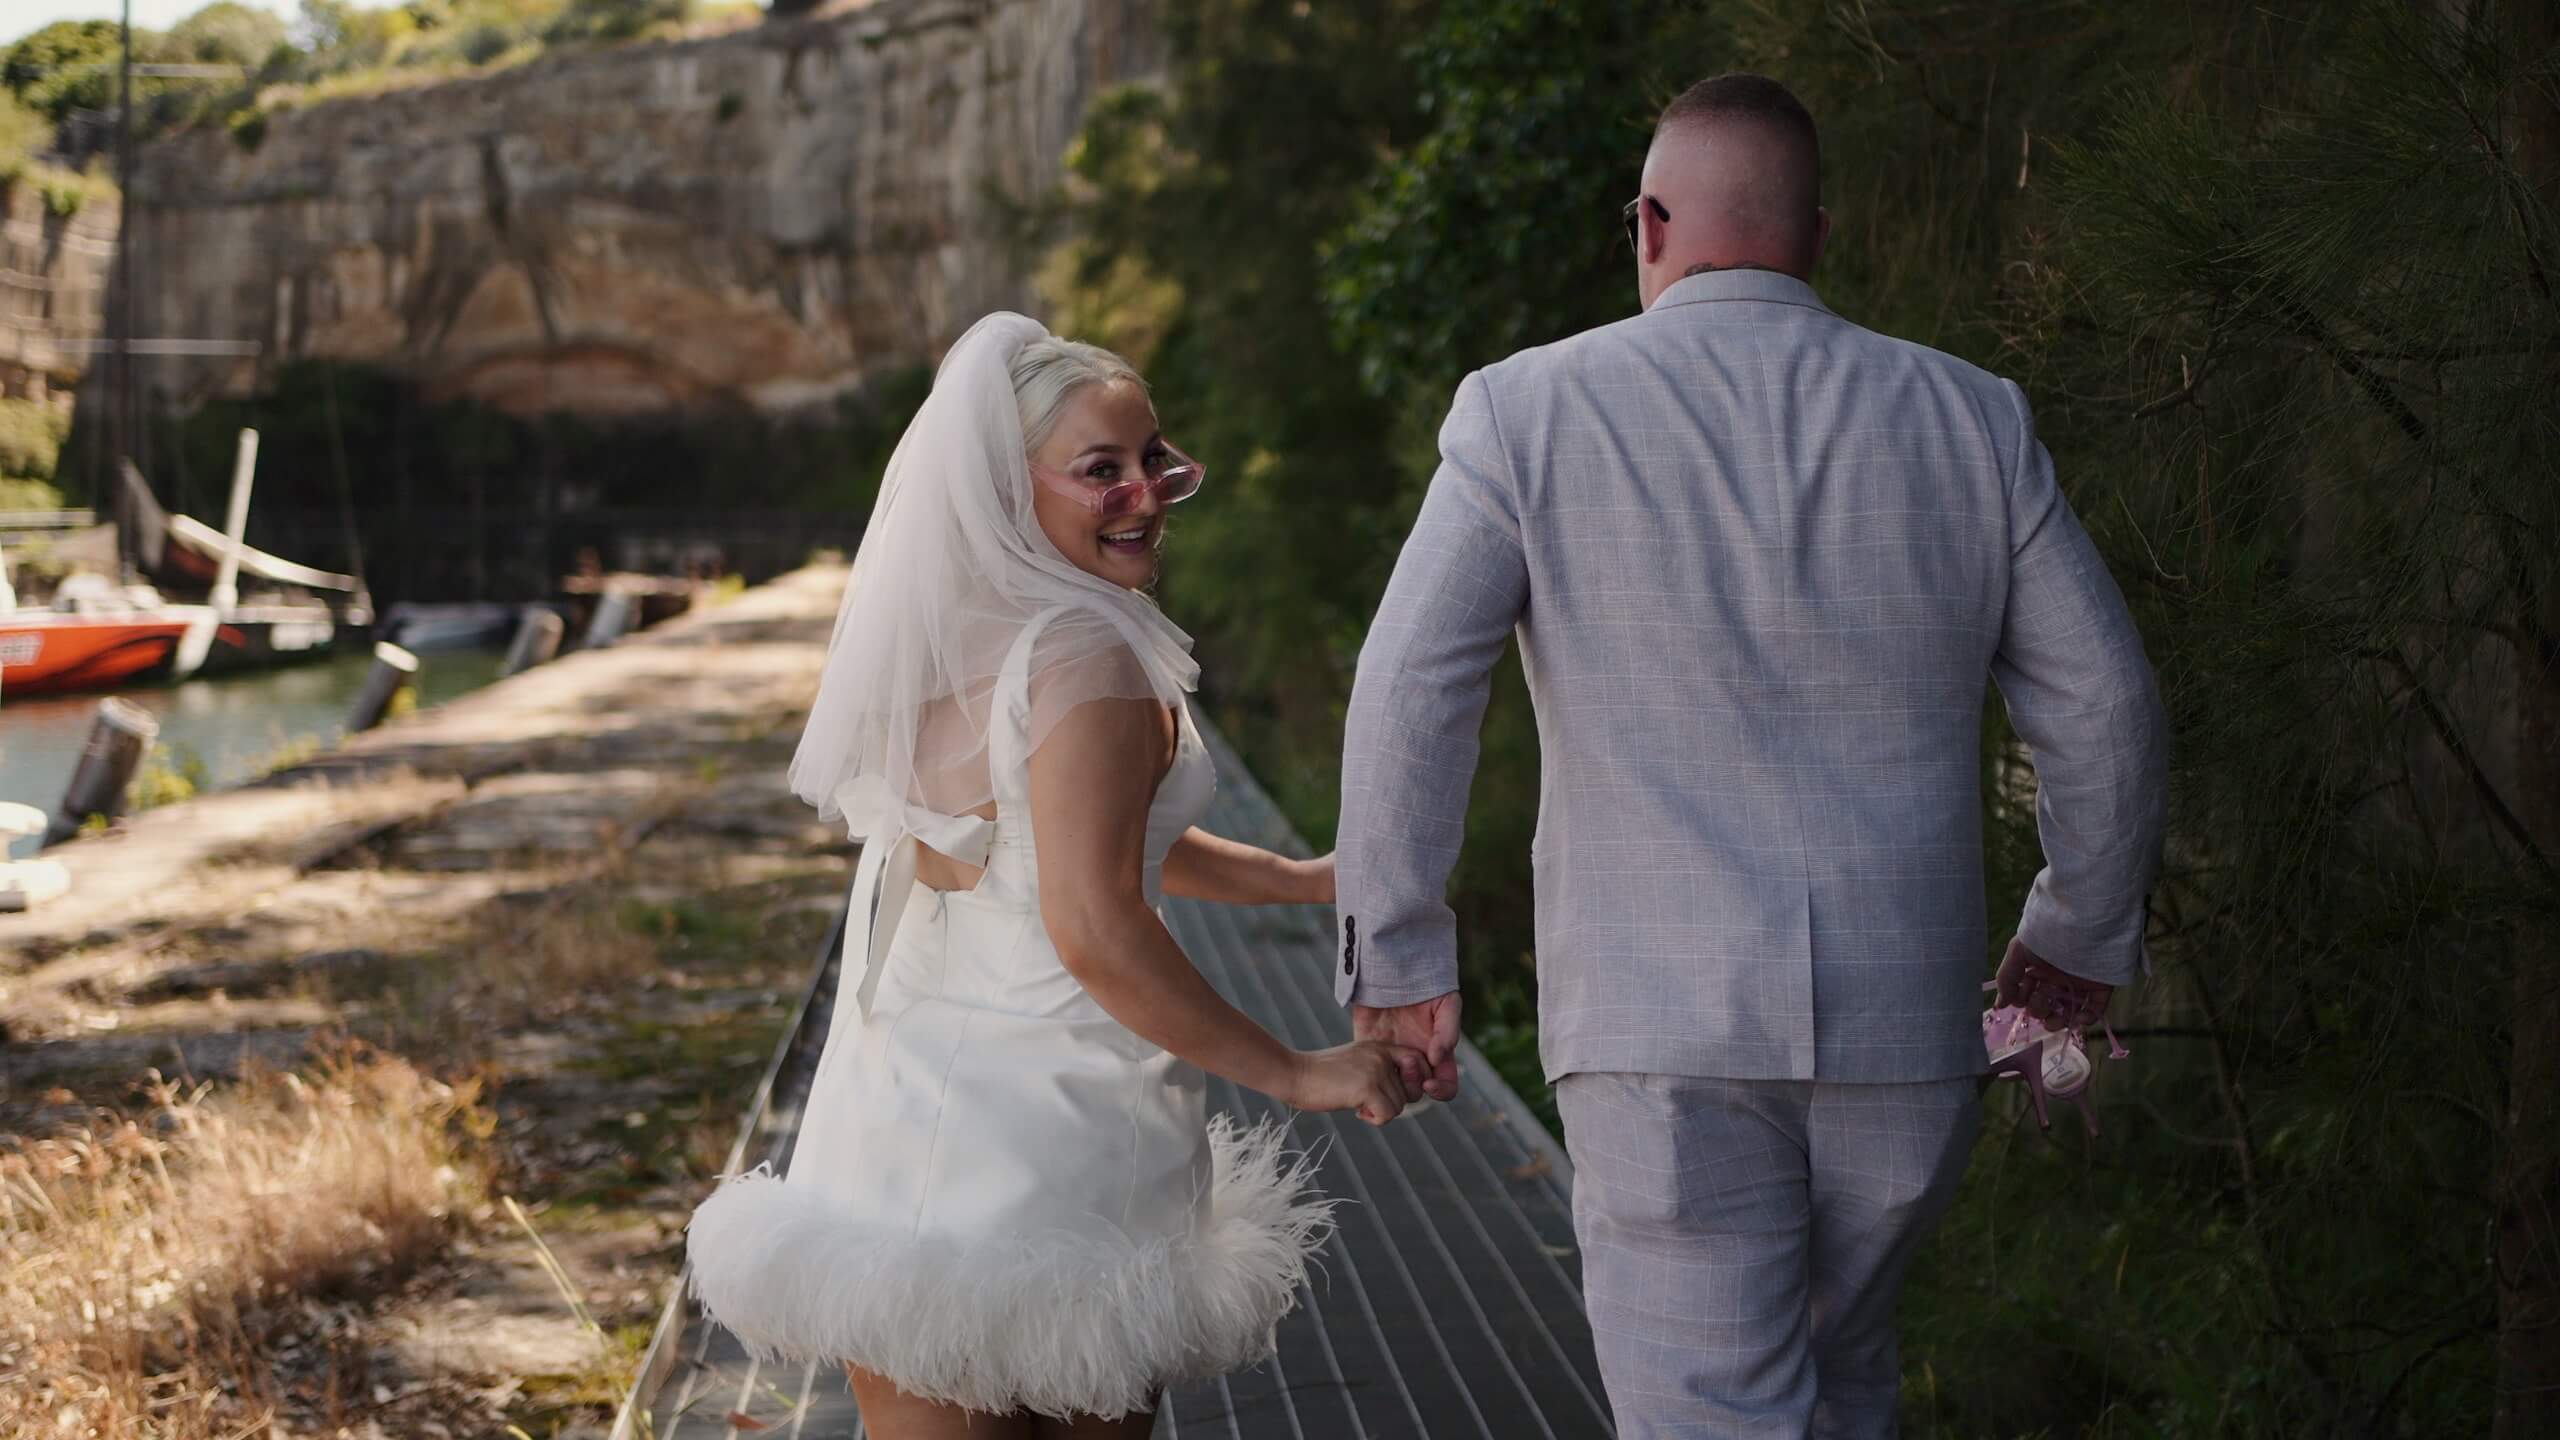 Elizabeth + Mitch Teaser Film // Deckhouse // Sydney Wedding Videography